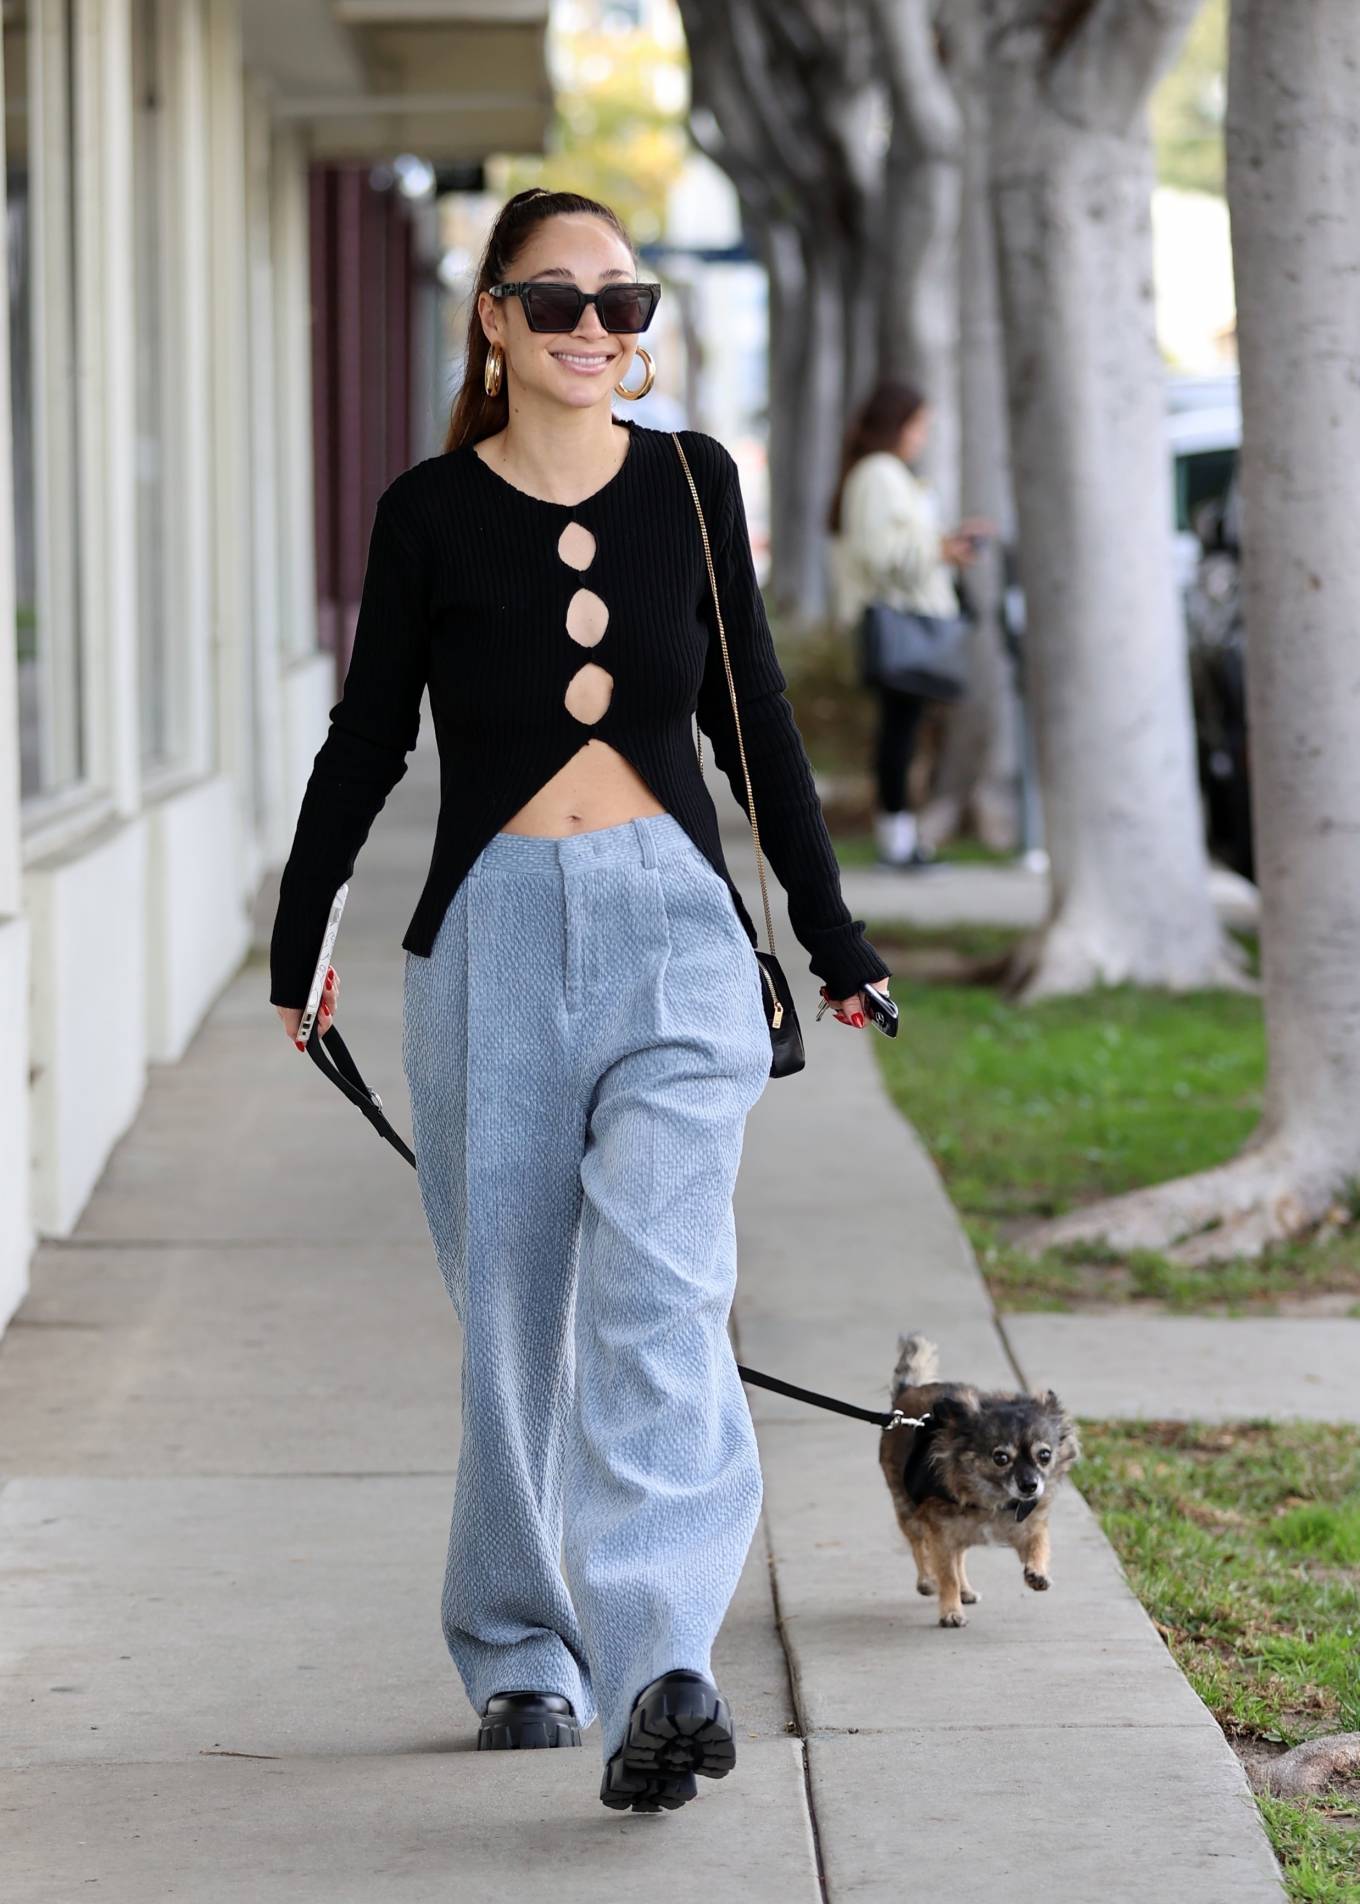 Cara Santana 2022 : Cara Santana – Heading to a hair salon with her adorable dog in Los Angeles-07